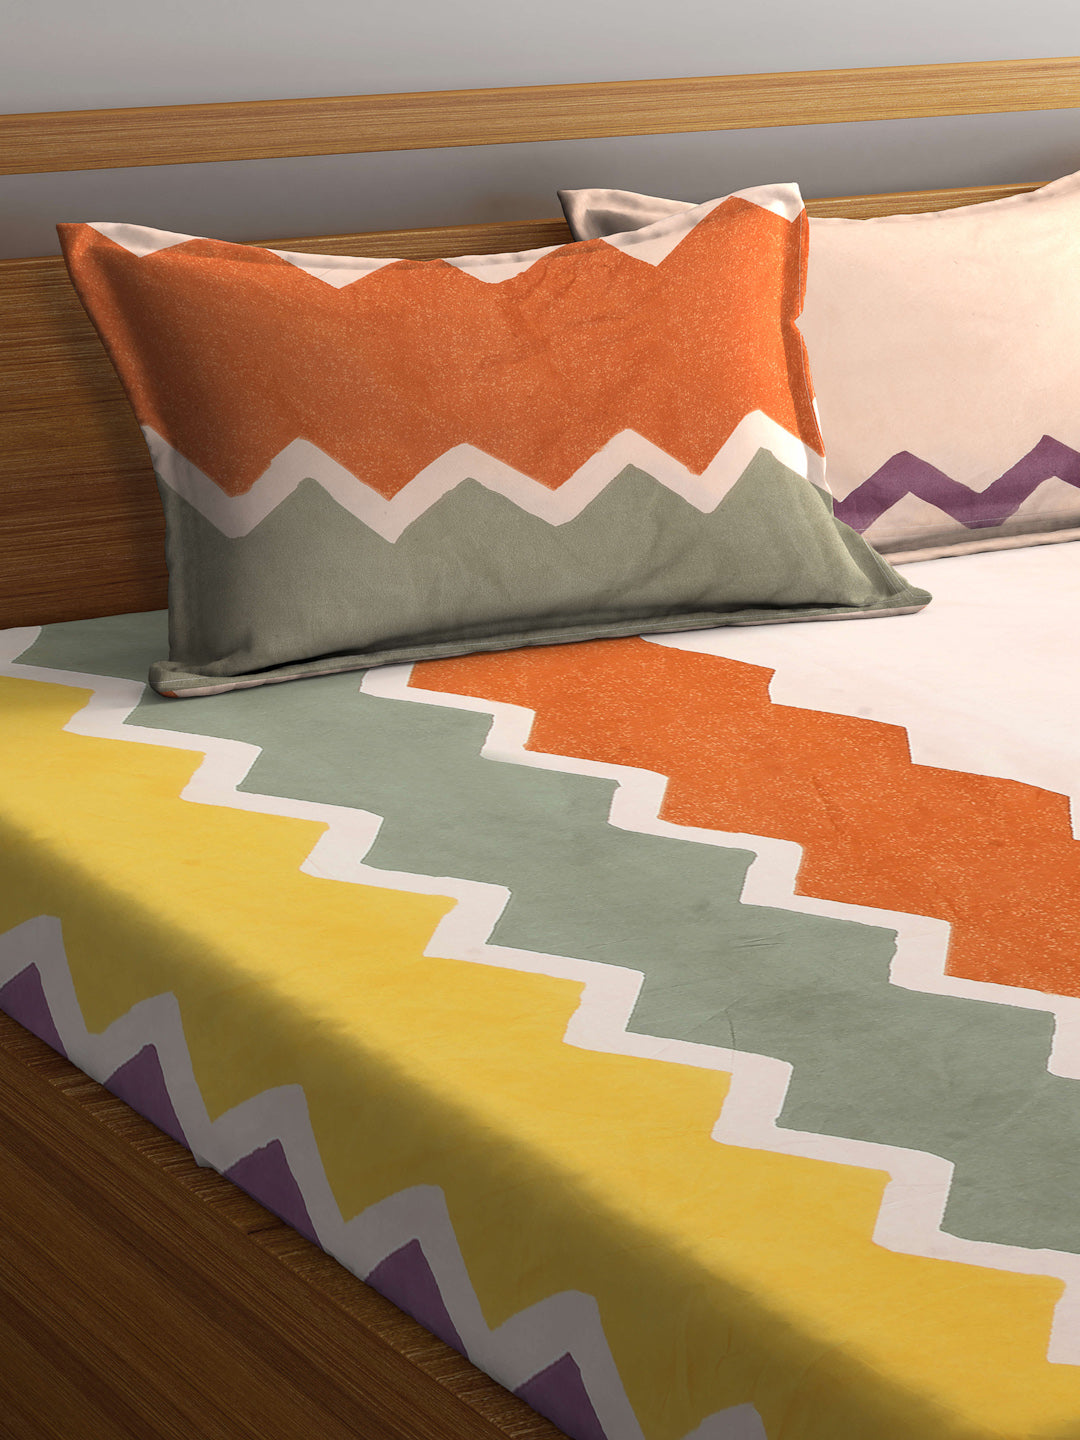 Arrabi Brown Geometric TC Cotton Blend Double Size Bedsheet with 2 Pillow Covers (250 x 215 cm)